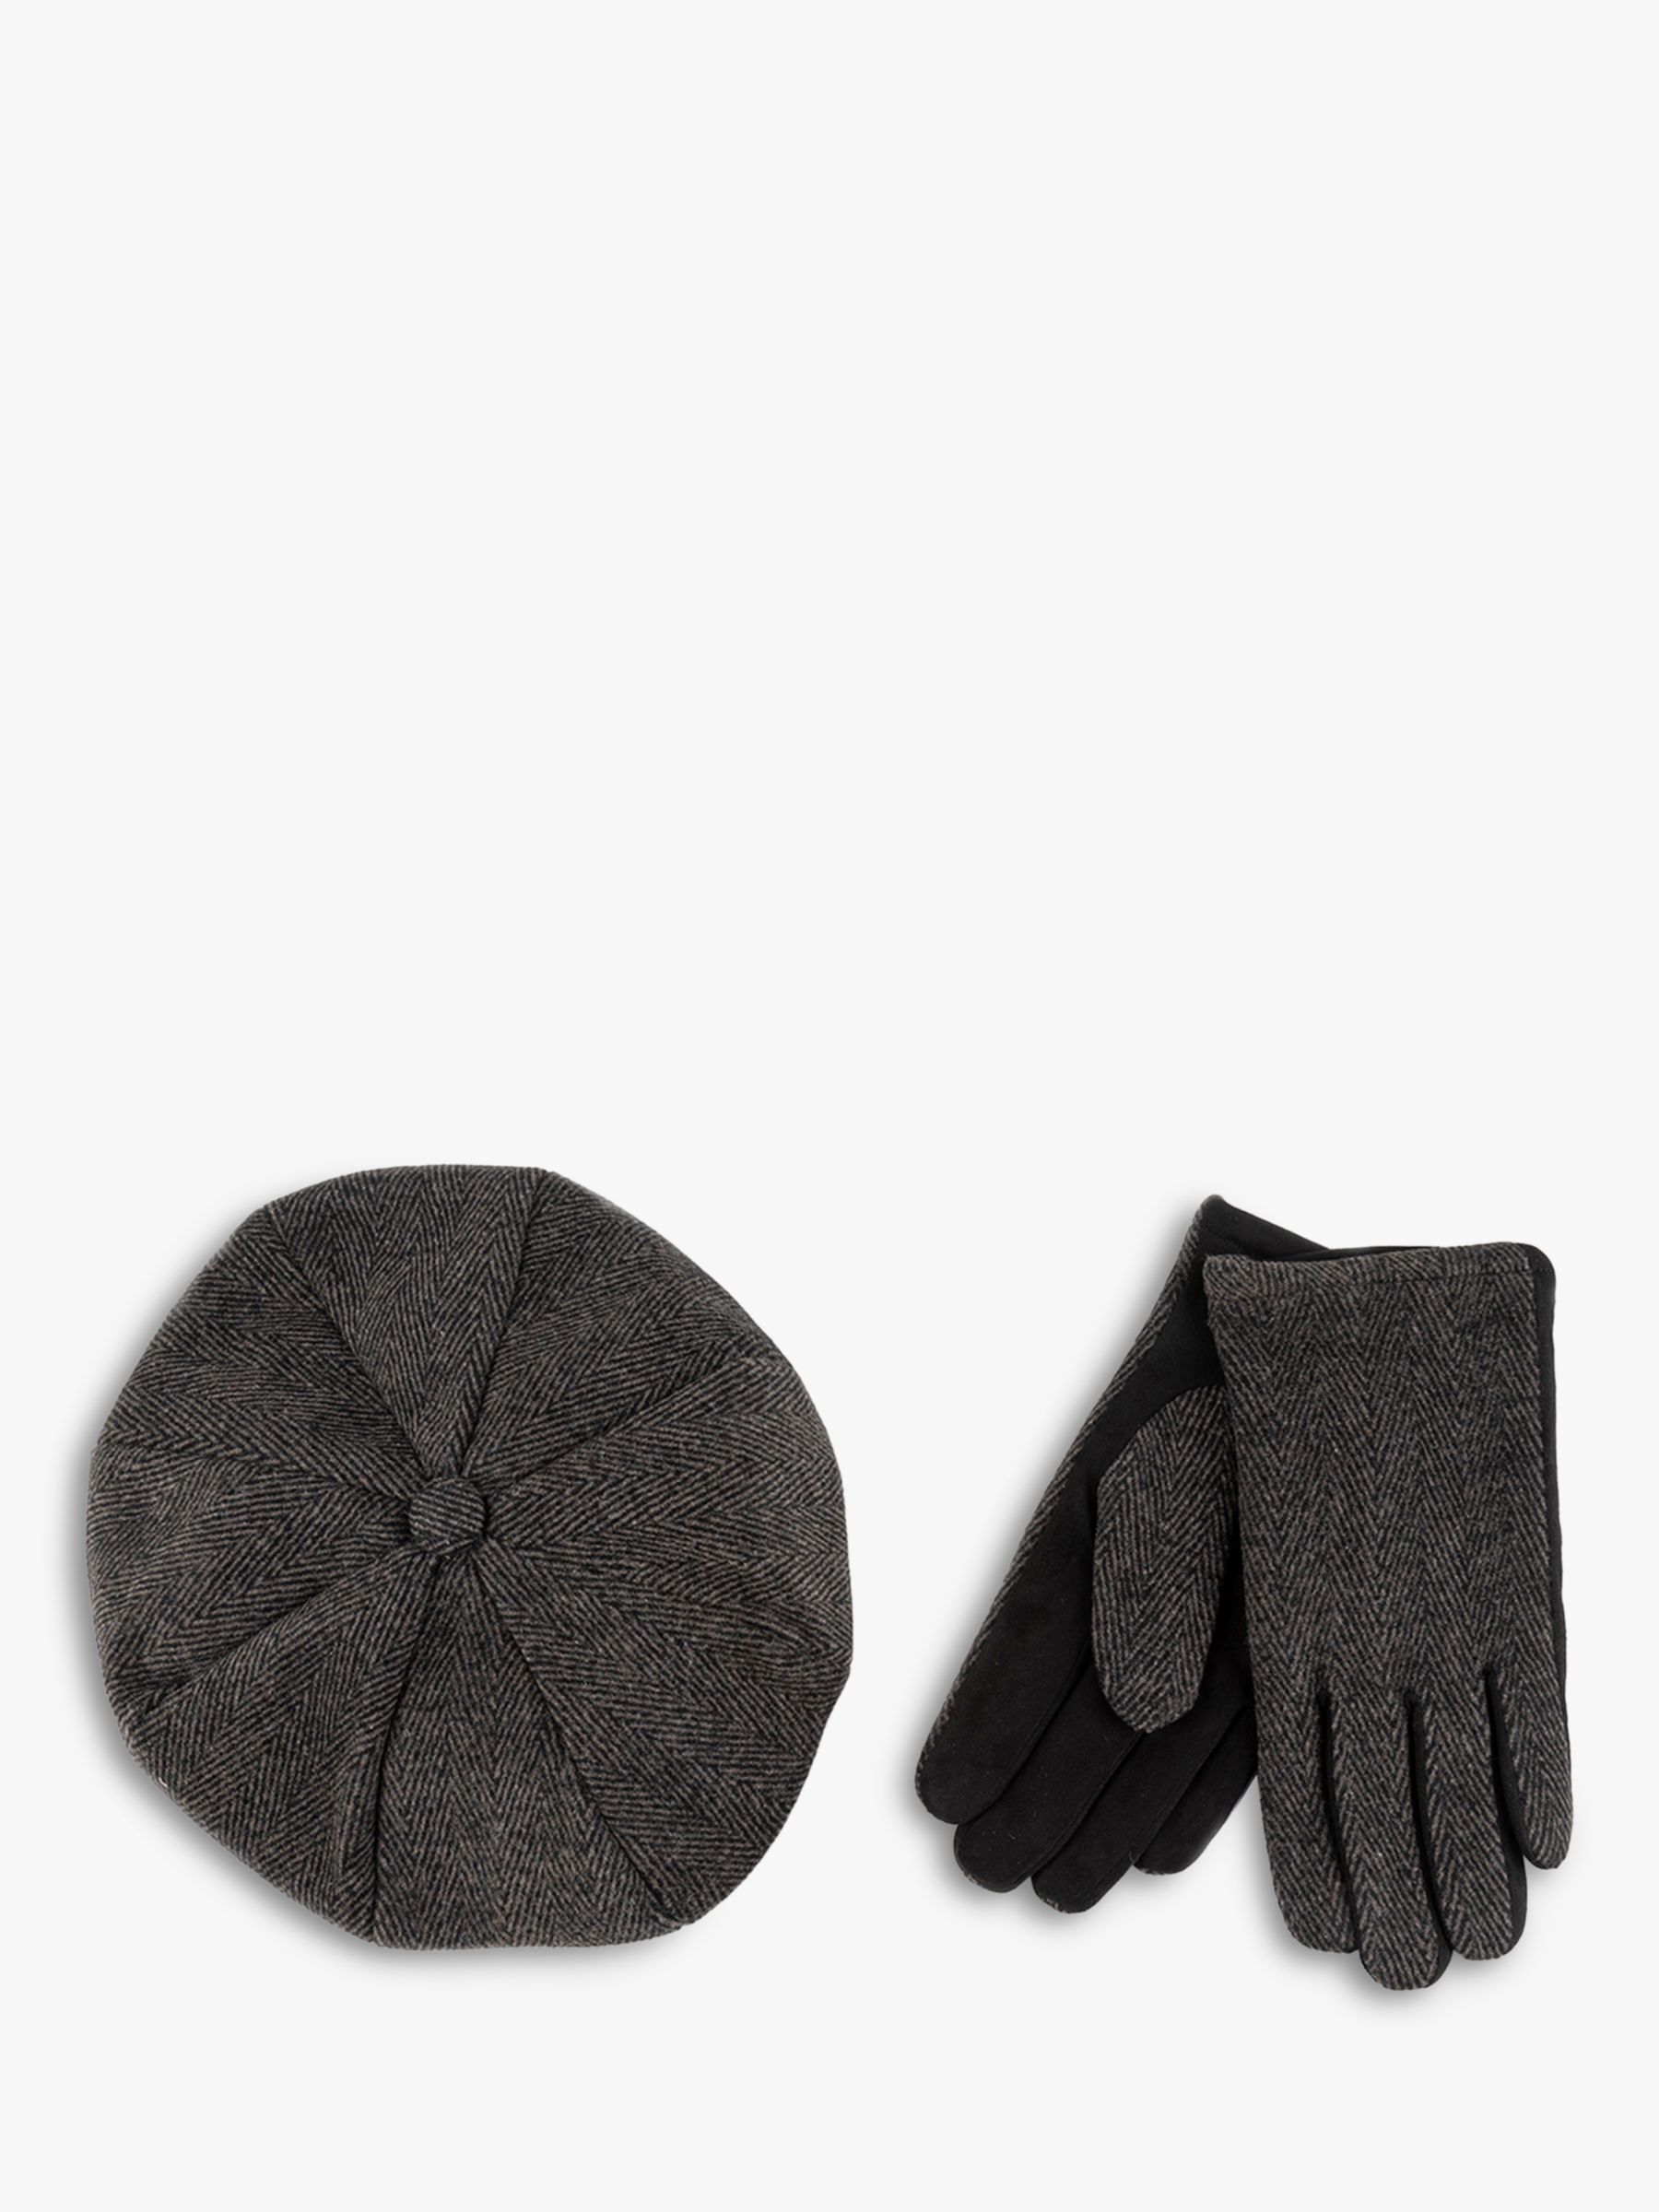 Buy totes Baker Boy Tweed Cap And Glove Set, Black Online at johnlewis.com